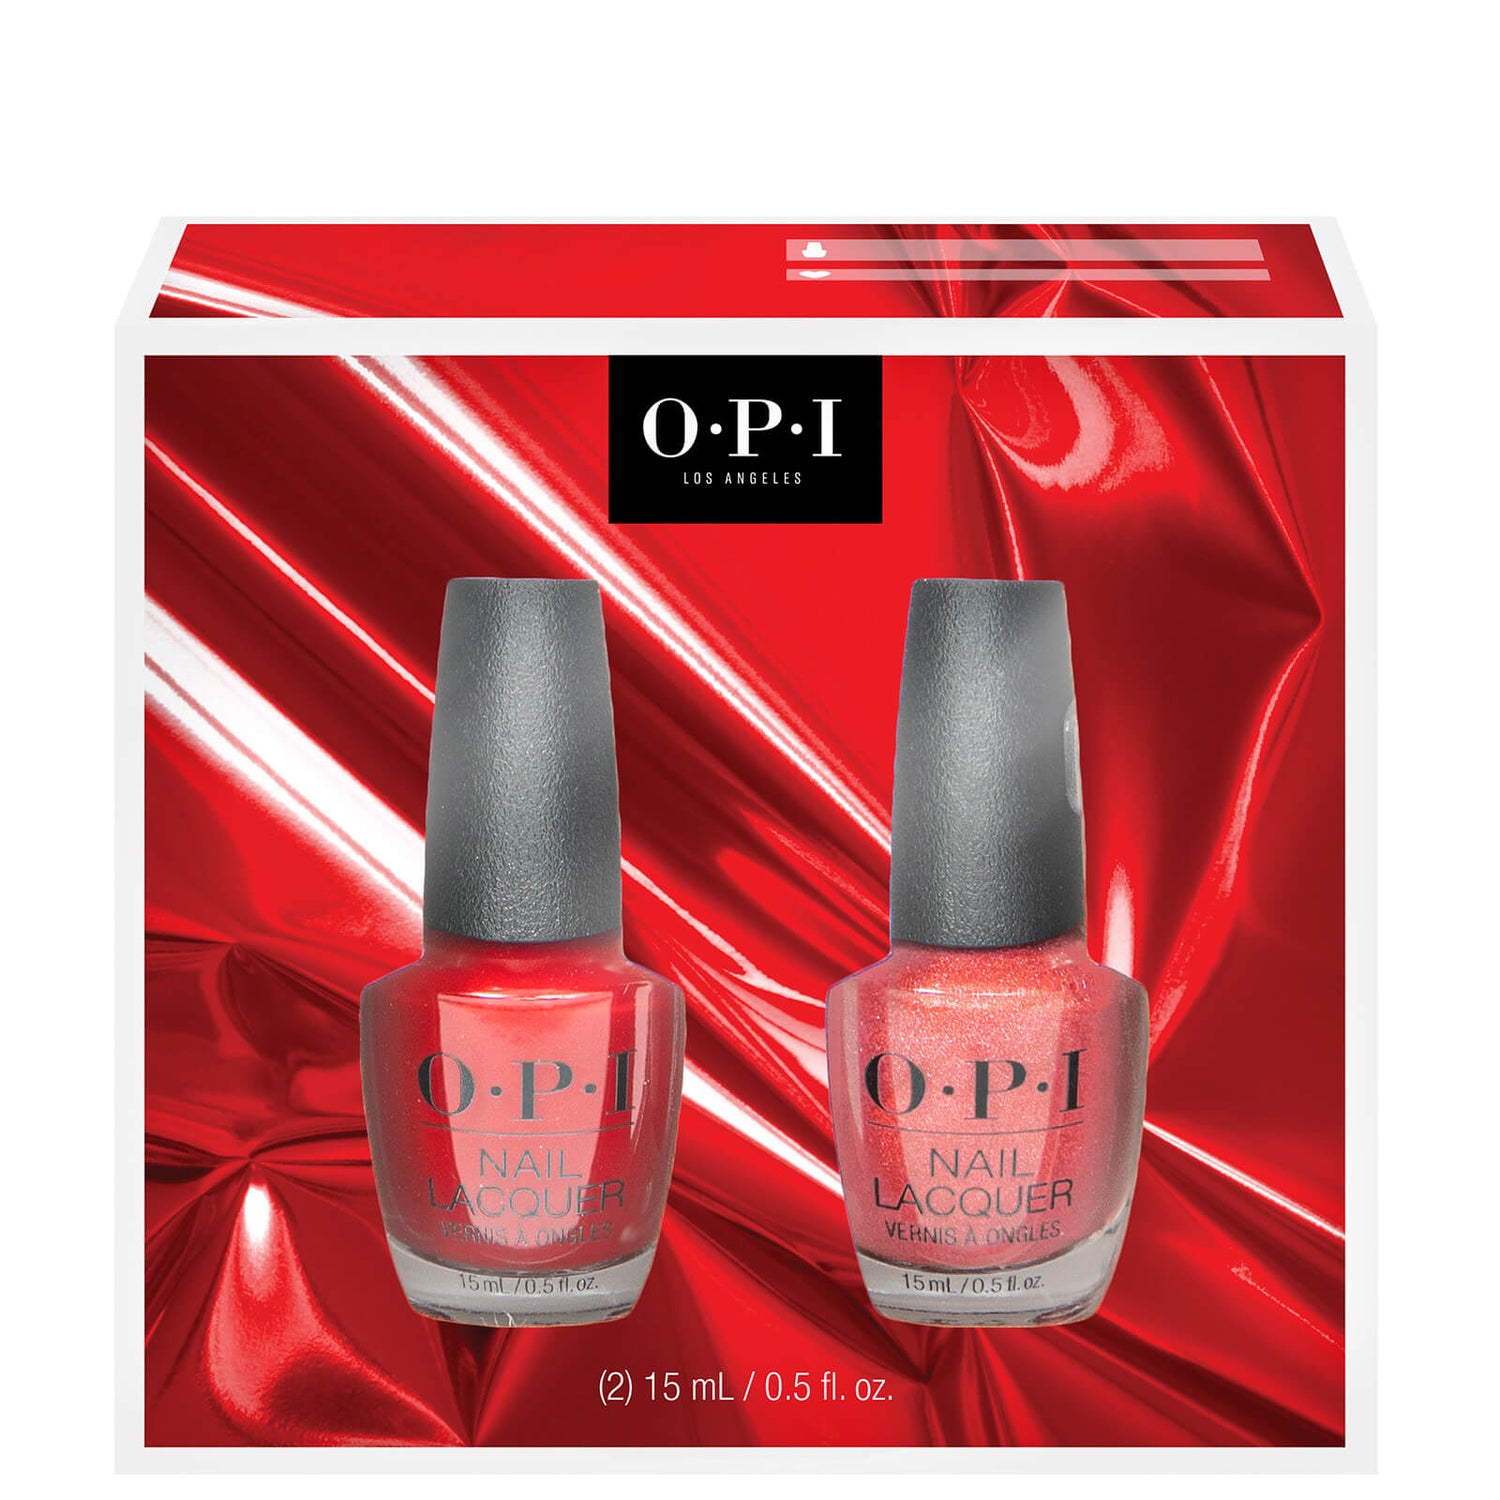 OPI Celebration Collection Nail Polish Duo Gift Set